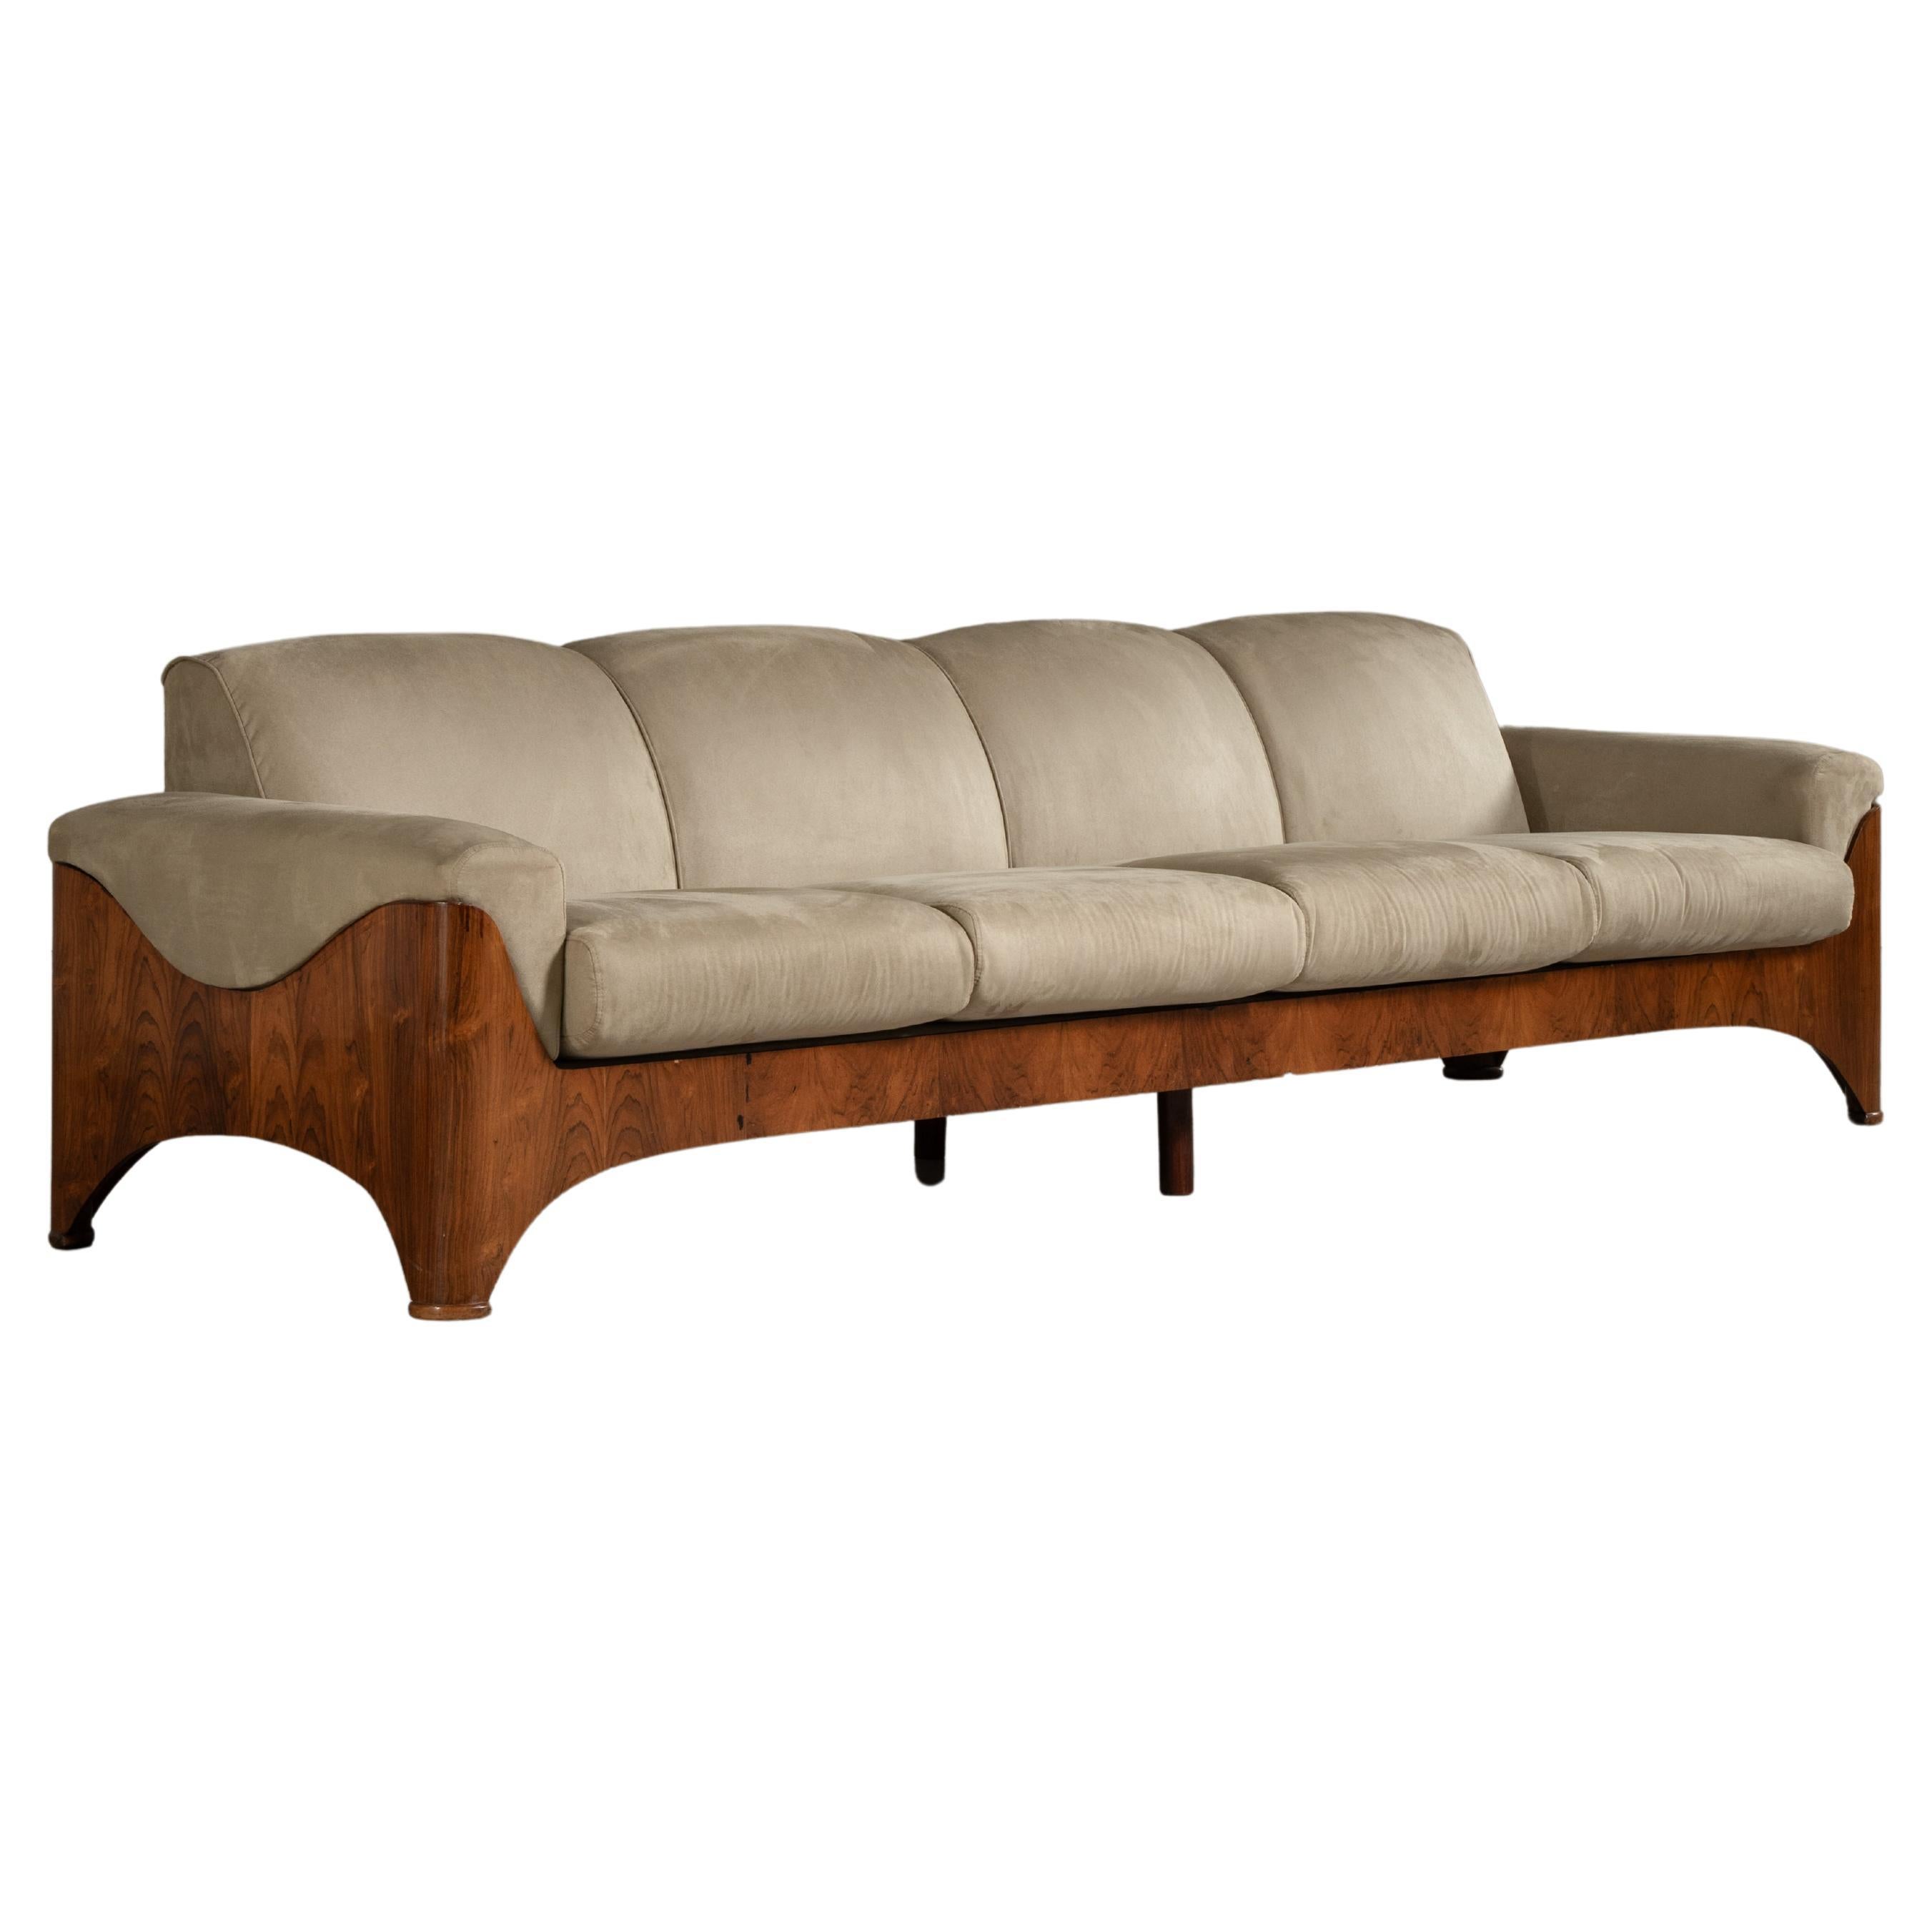 Curvilineal Four-Seater Sofa in Veneered Tropical Hardwood, Brazilian Modernism